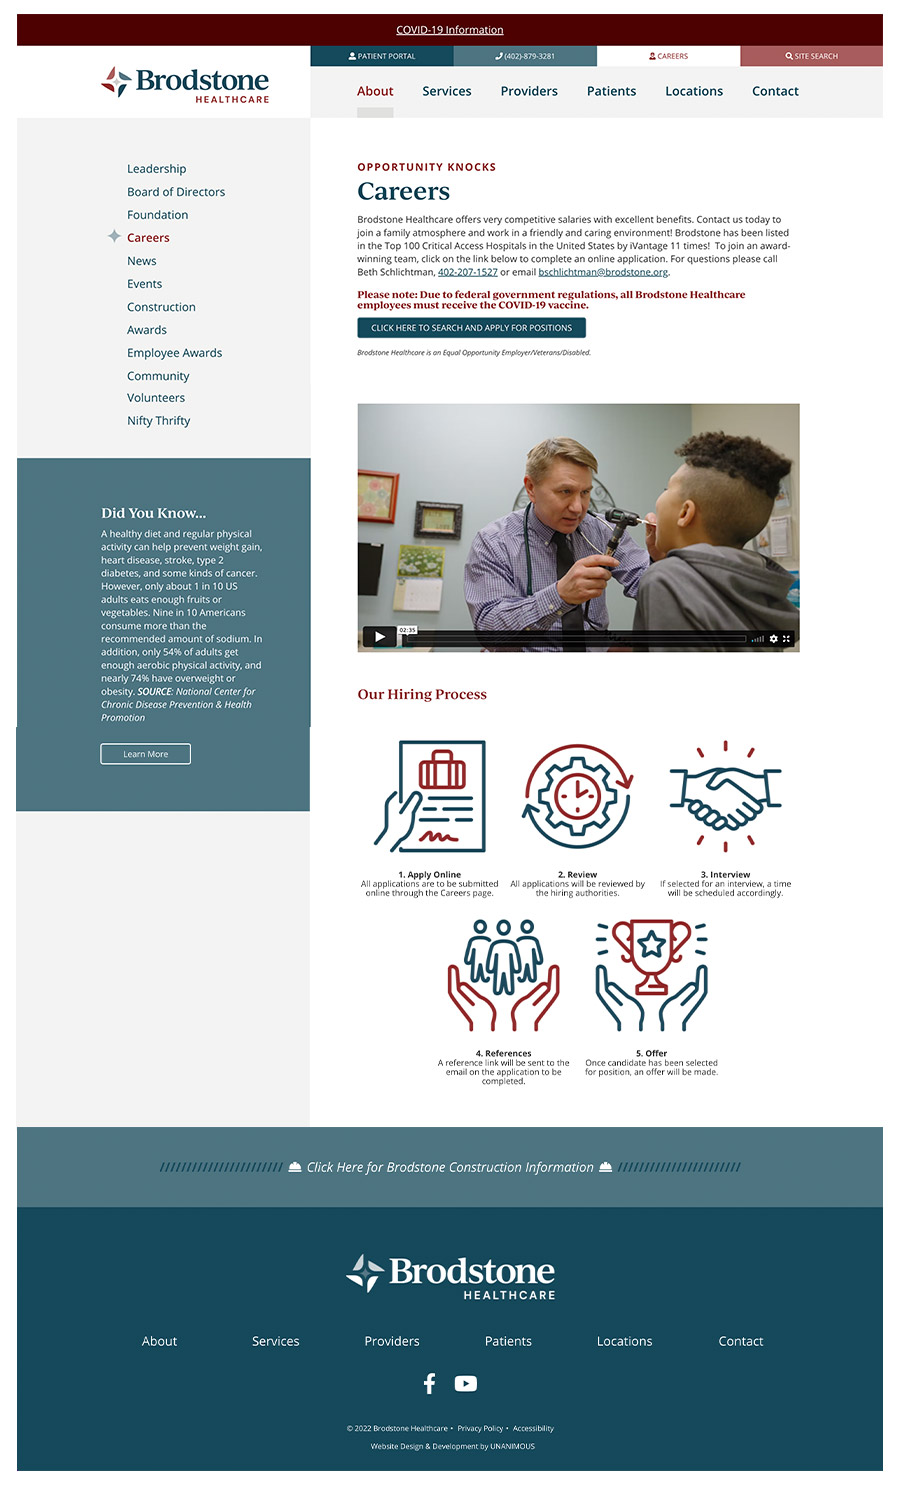 brodstone healthcare website design careers